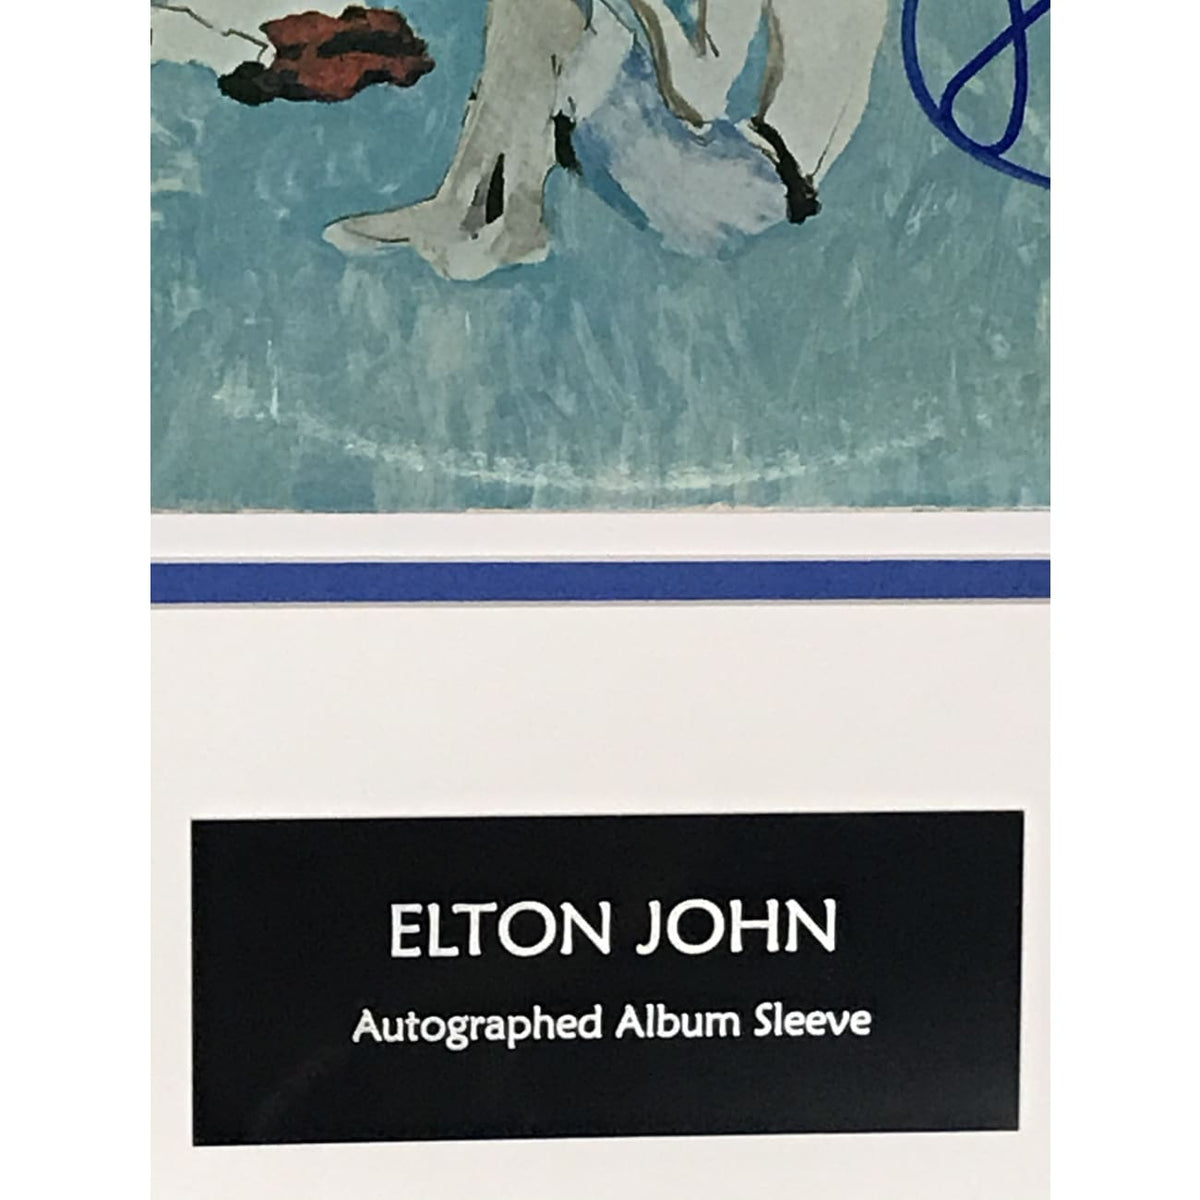 elton john blue album